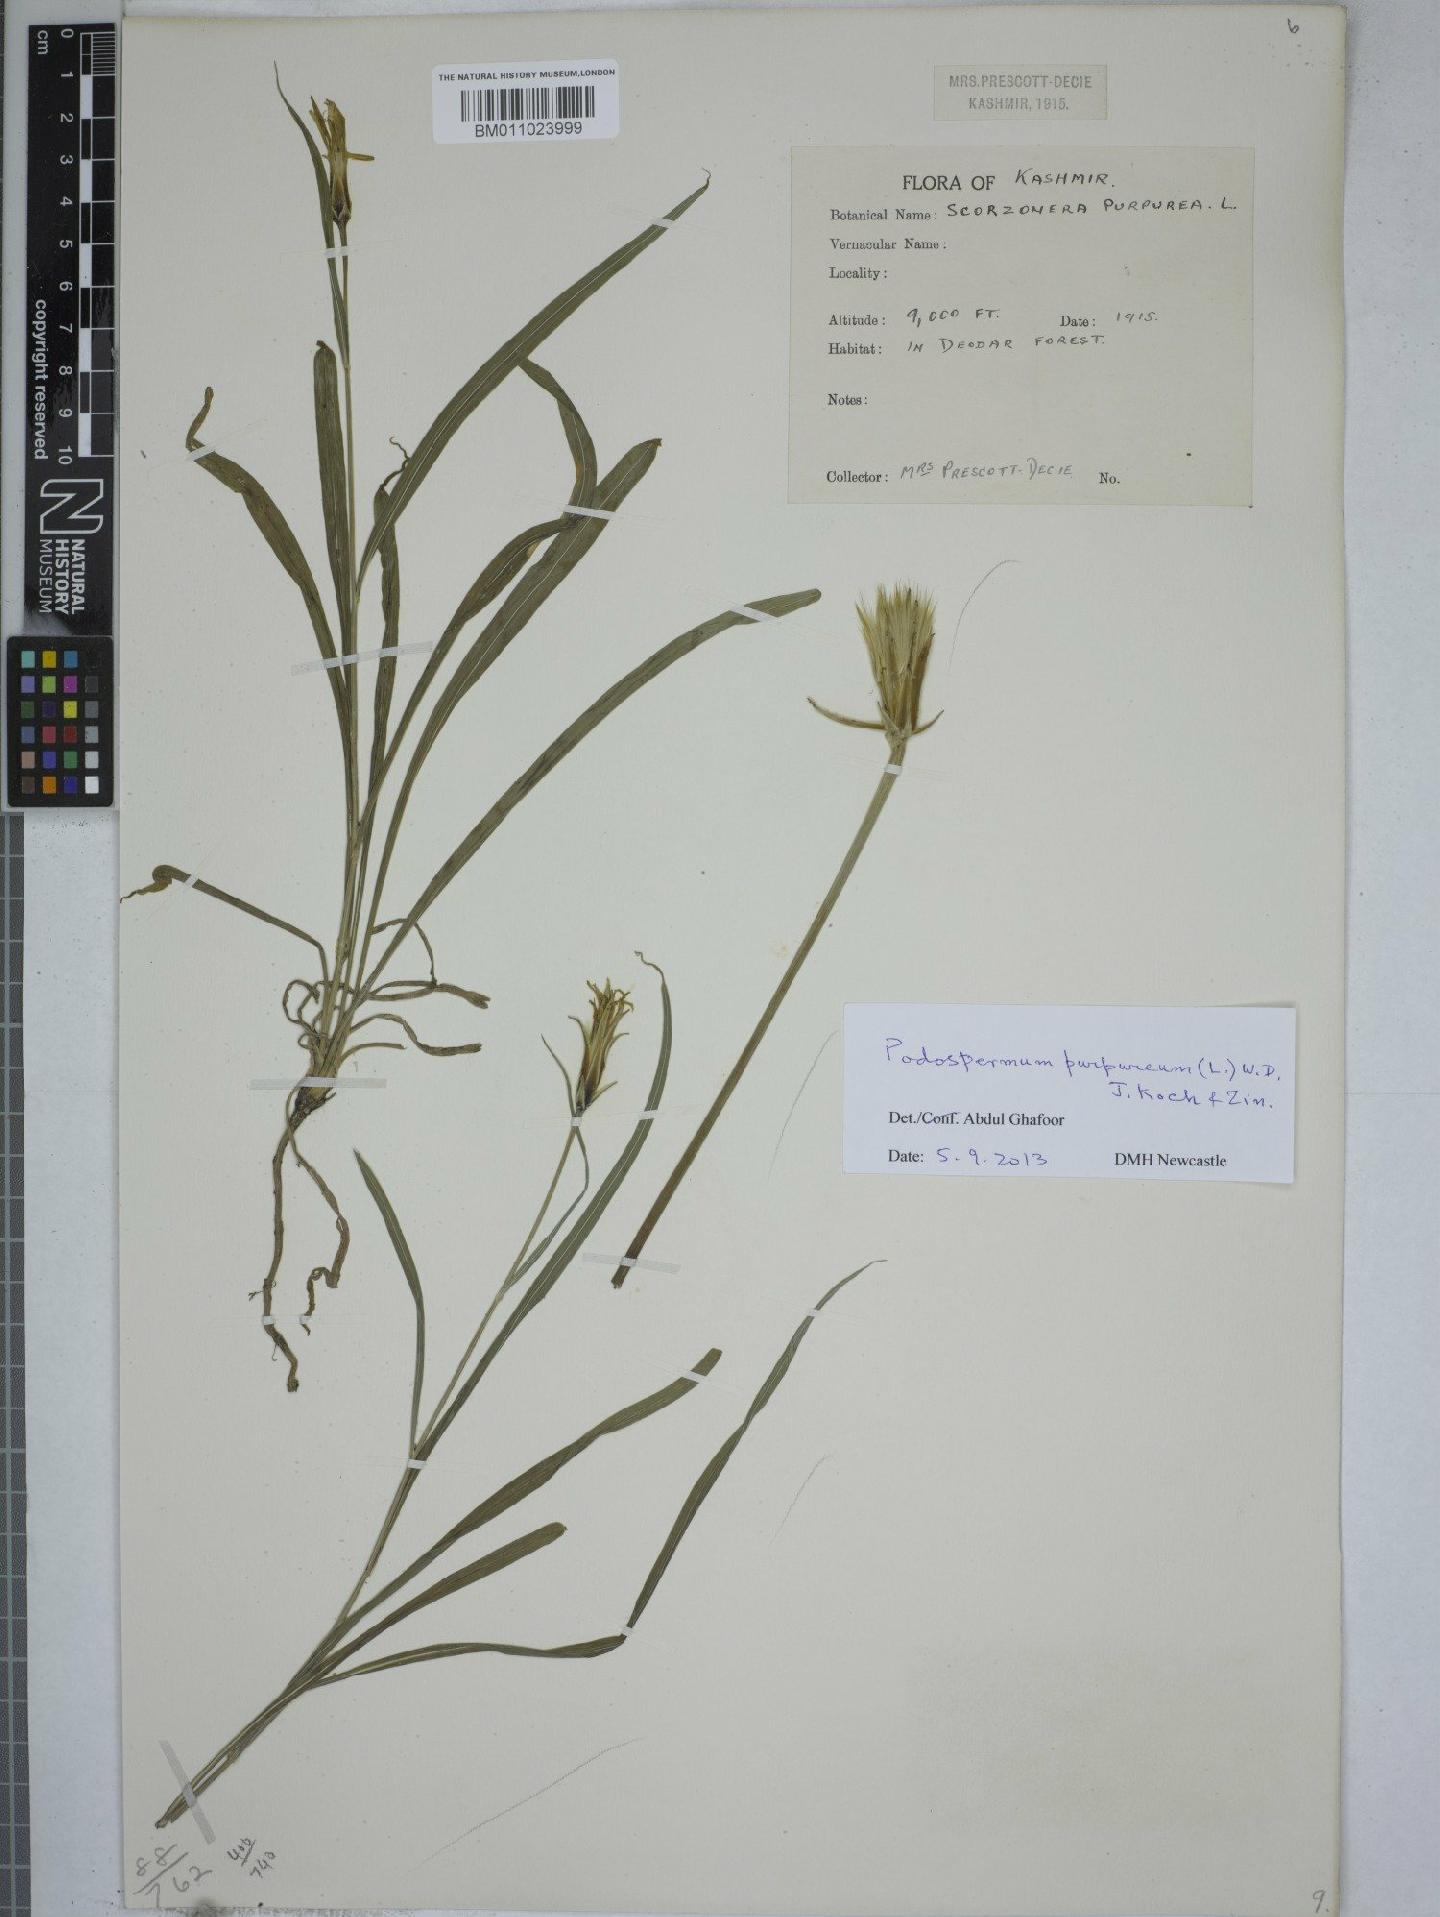 To NHMUK collection (Scorzonera purpurea L.; NHMUK:ecatalogue:9152707)